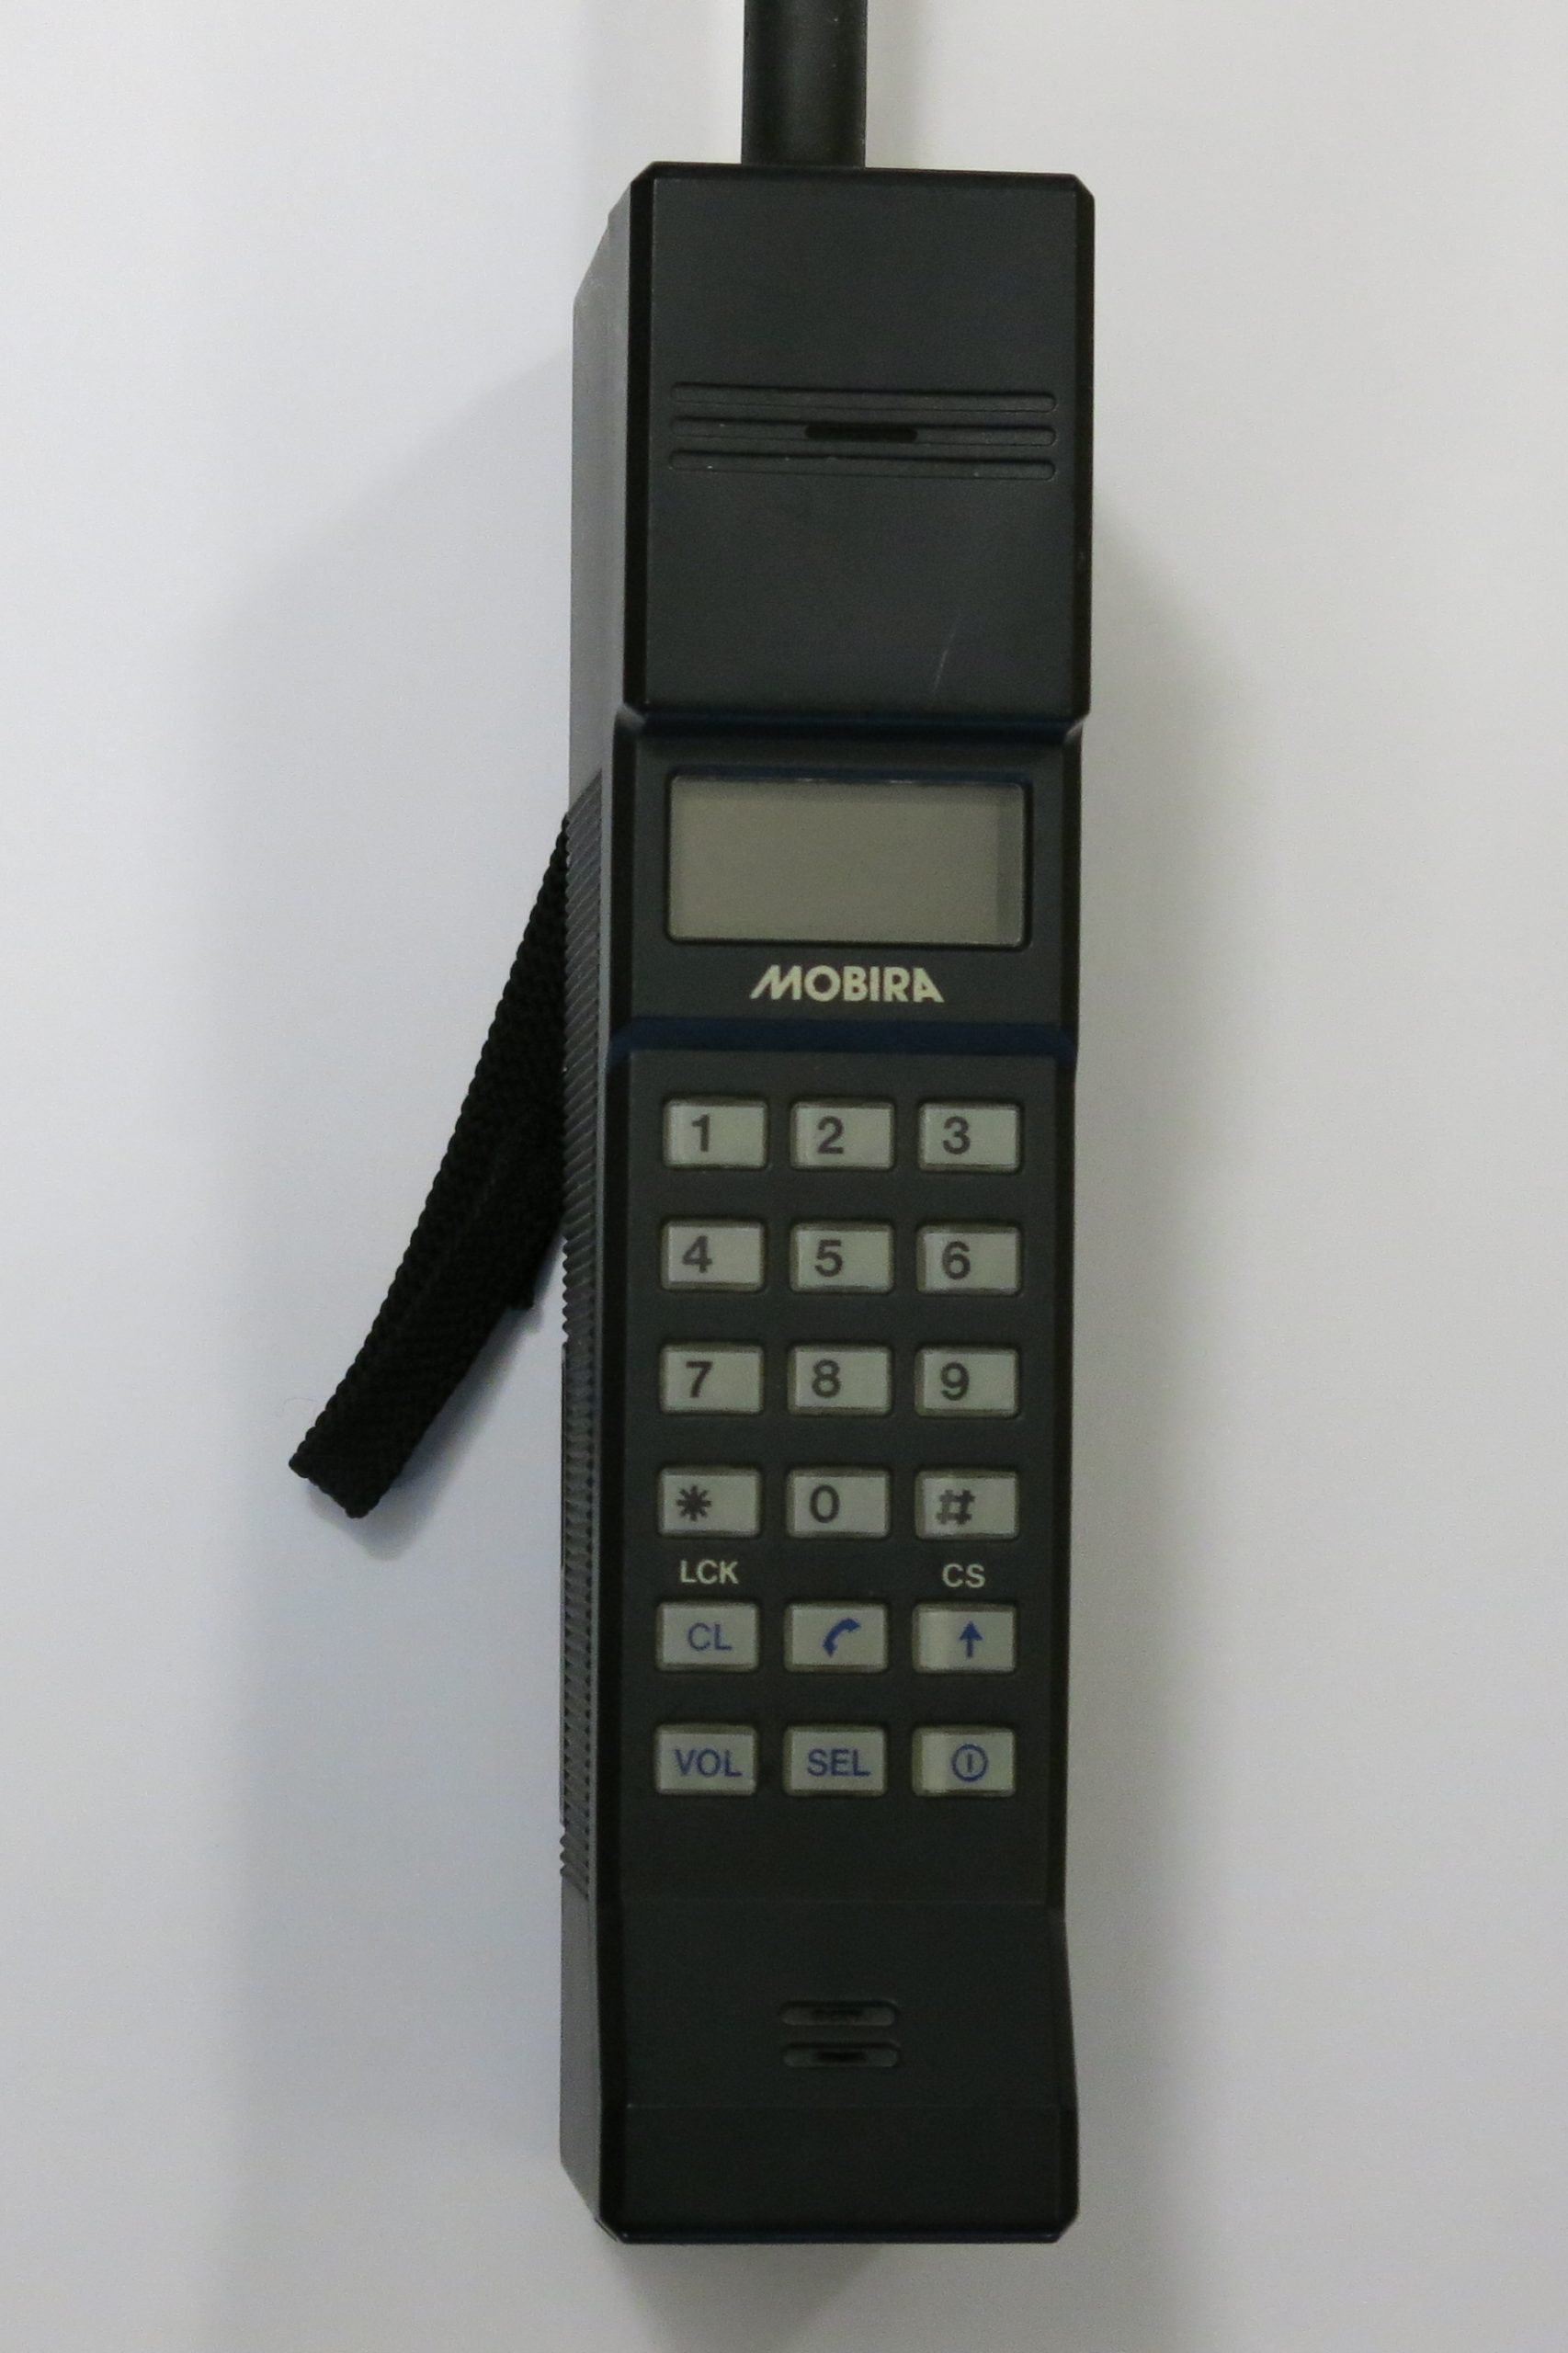 Telefon Nokia-Mobira z 1985 roku